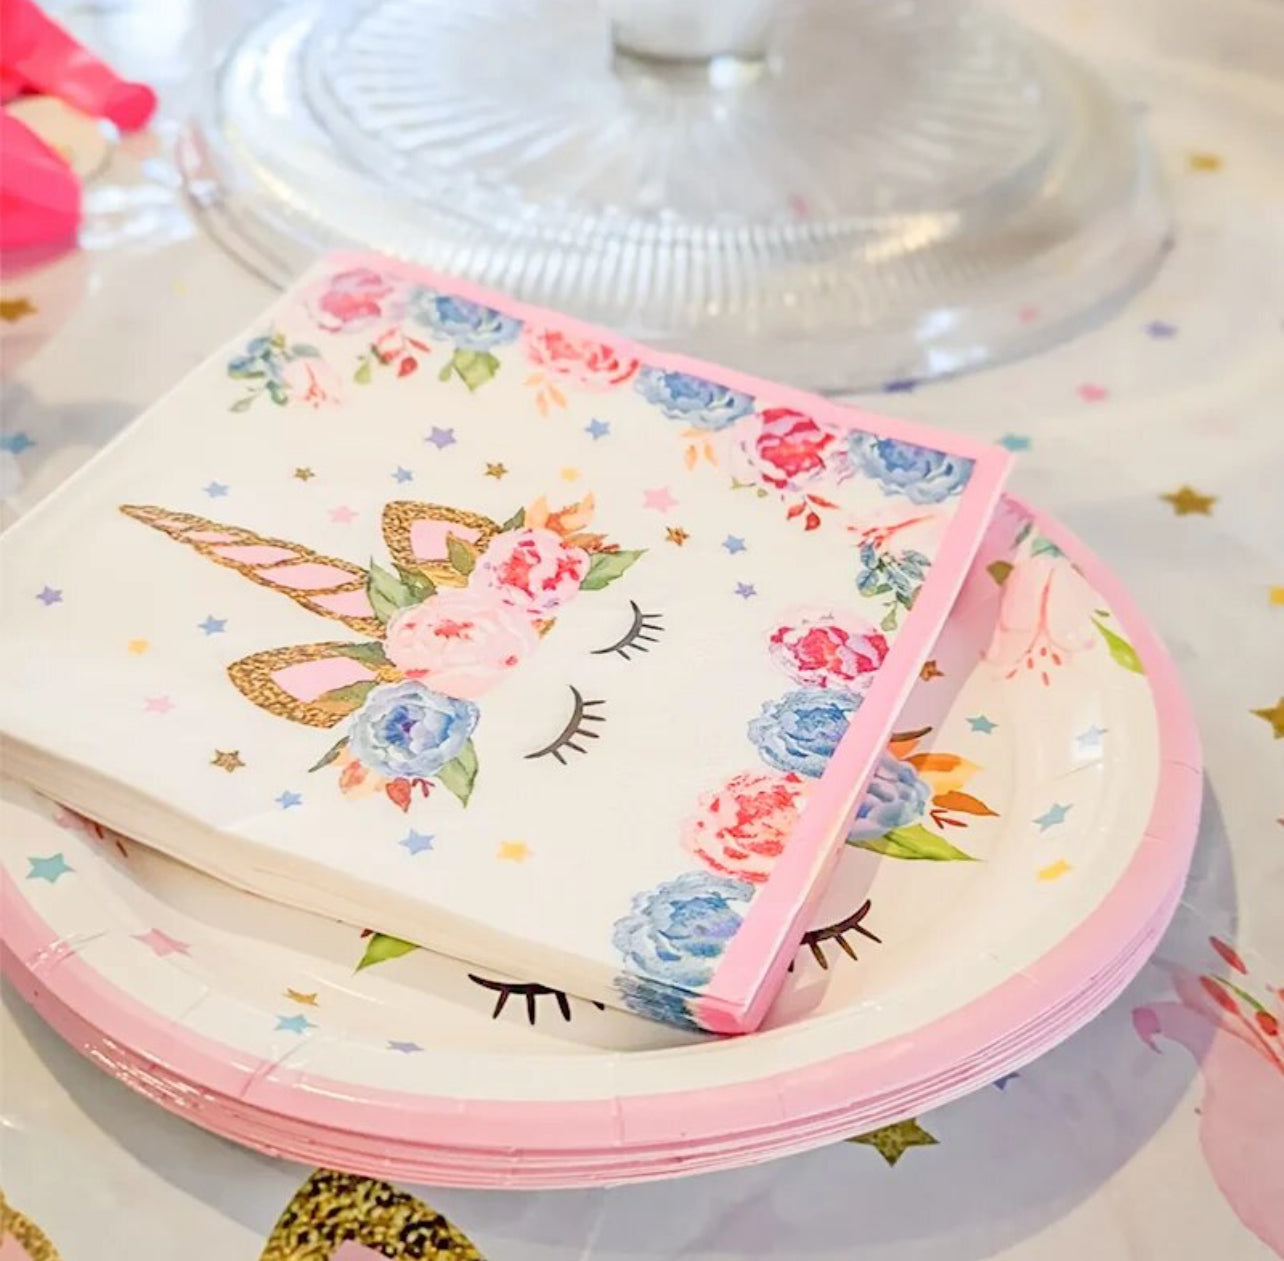 Rainbow Unicorn Birthday Theme 🦄 Disposable Tableware Set Plate/Cup/Tablecloth/Banner, Modish 🎈 Party Decor